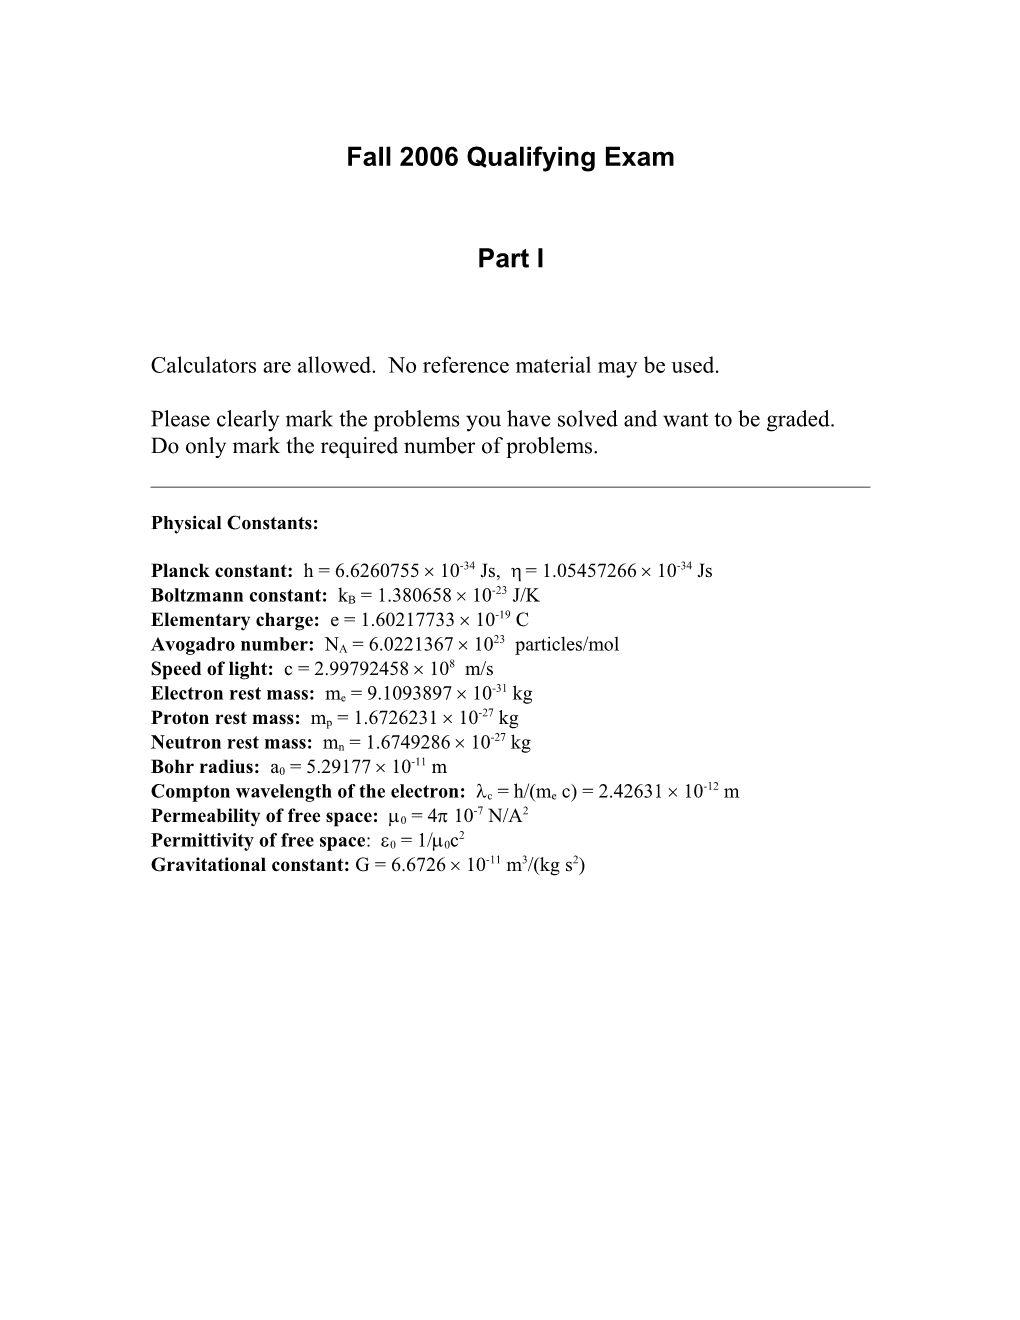 Fall 2005 Qualifying Exam